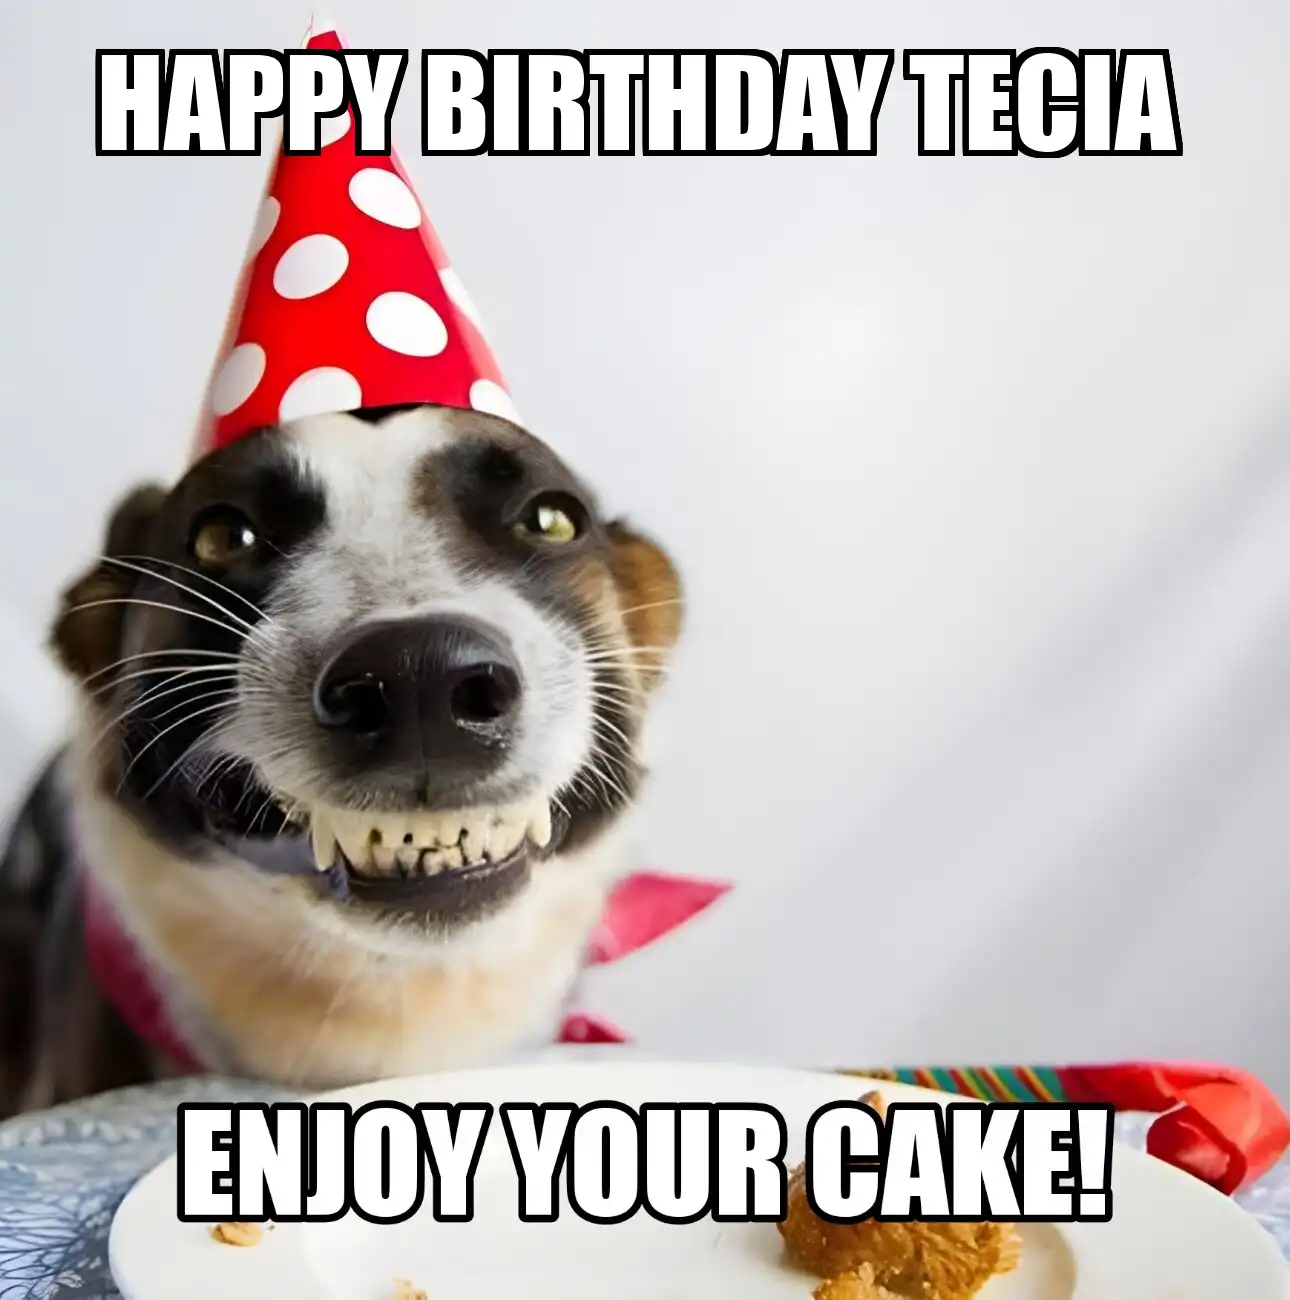 Happy Birthday Tecia Enjoy Your Cake Dog Meme